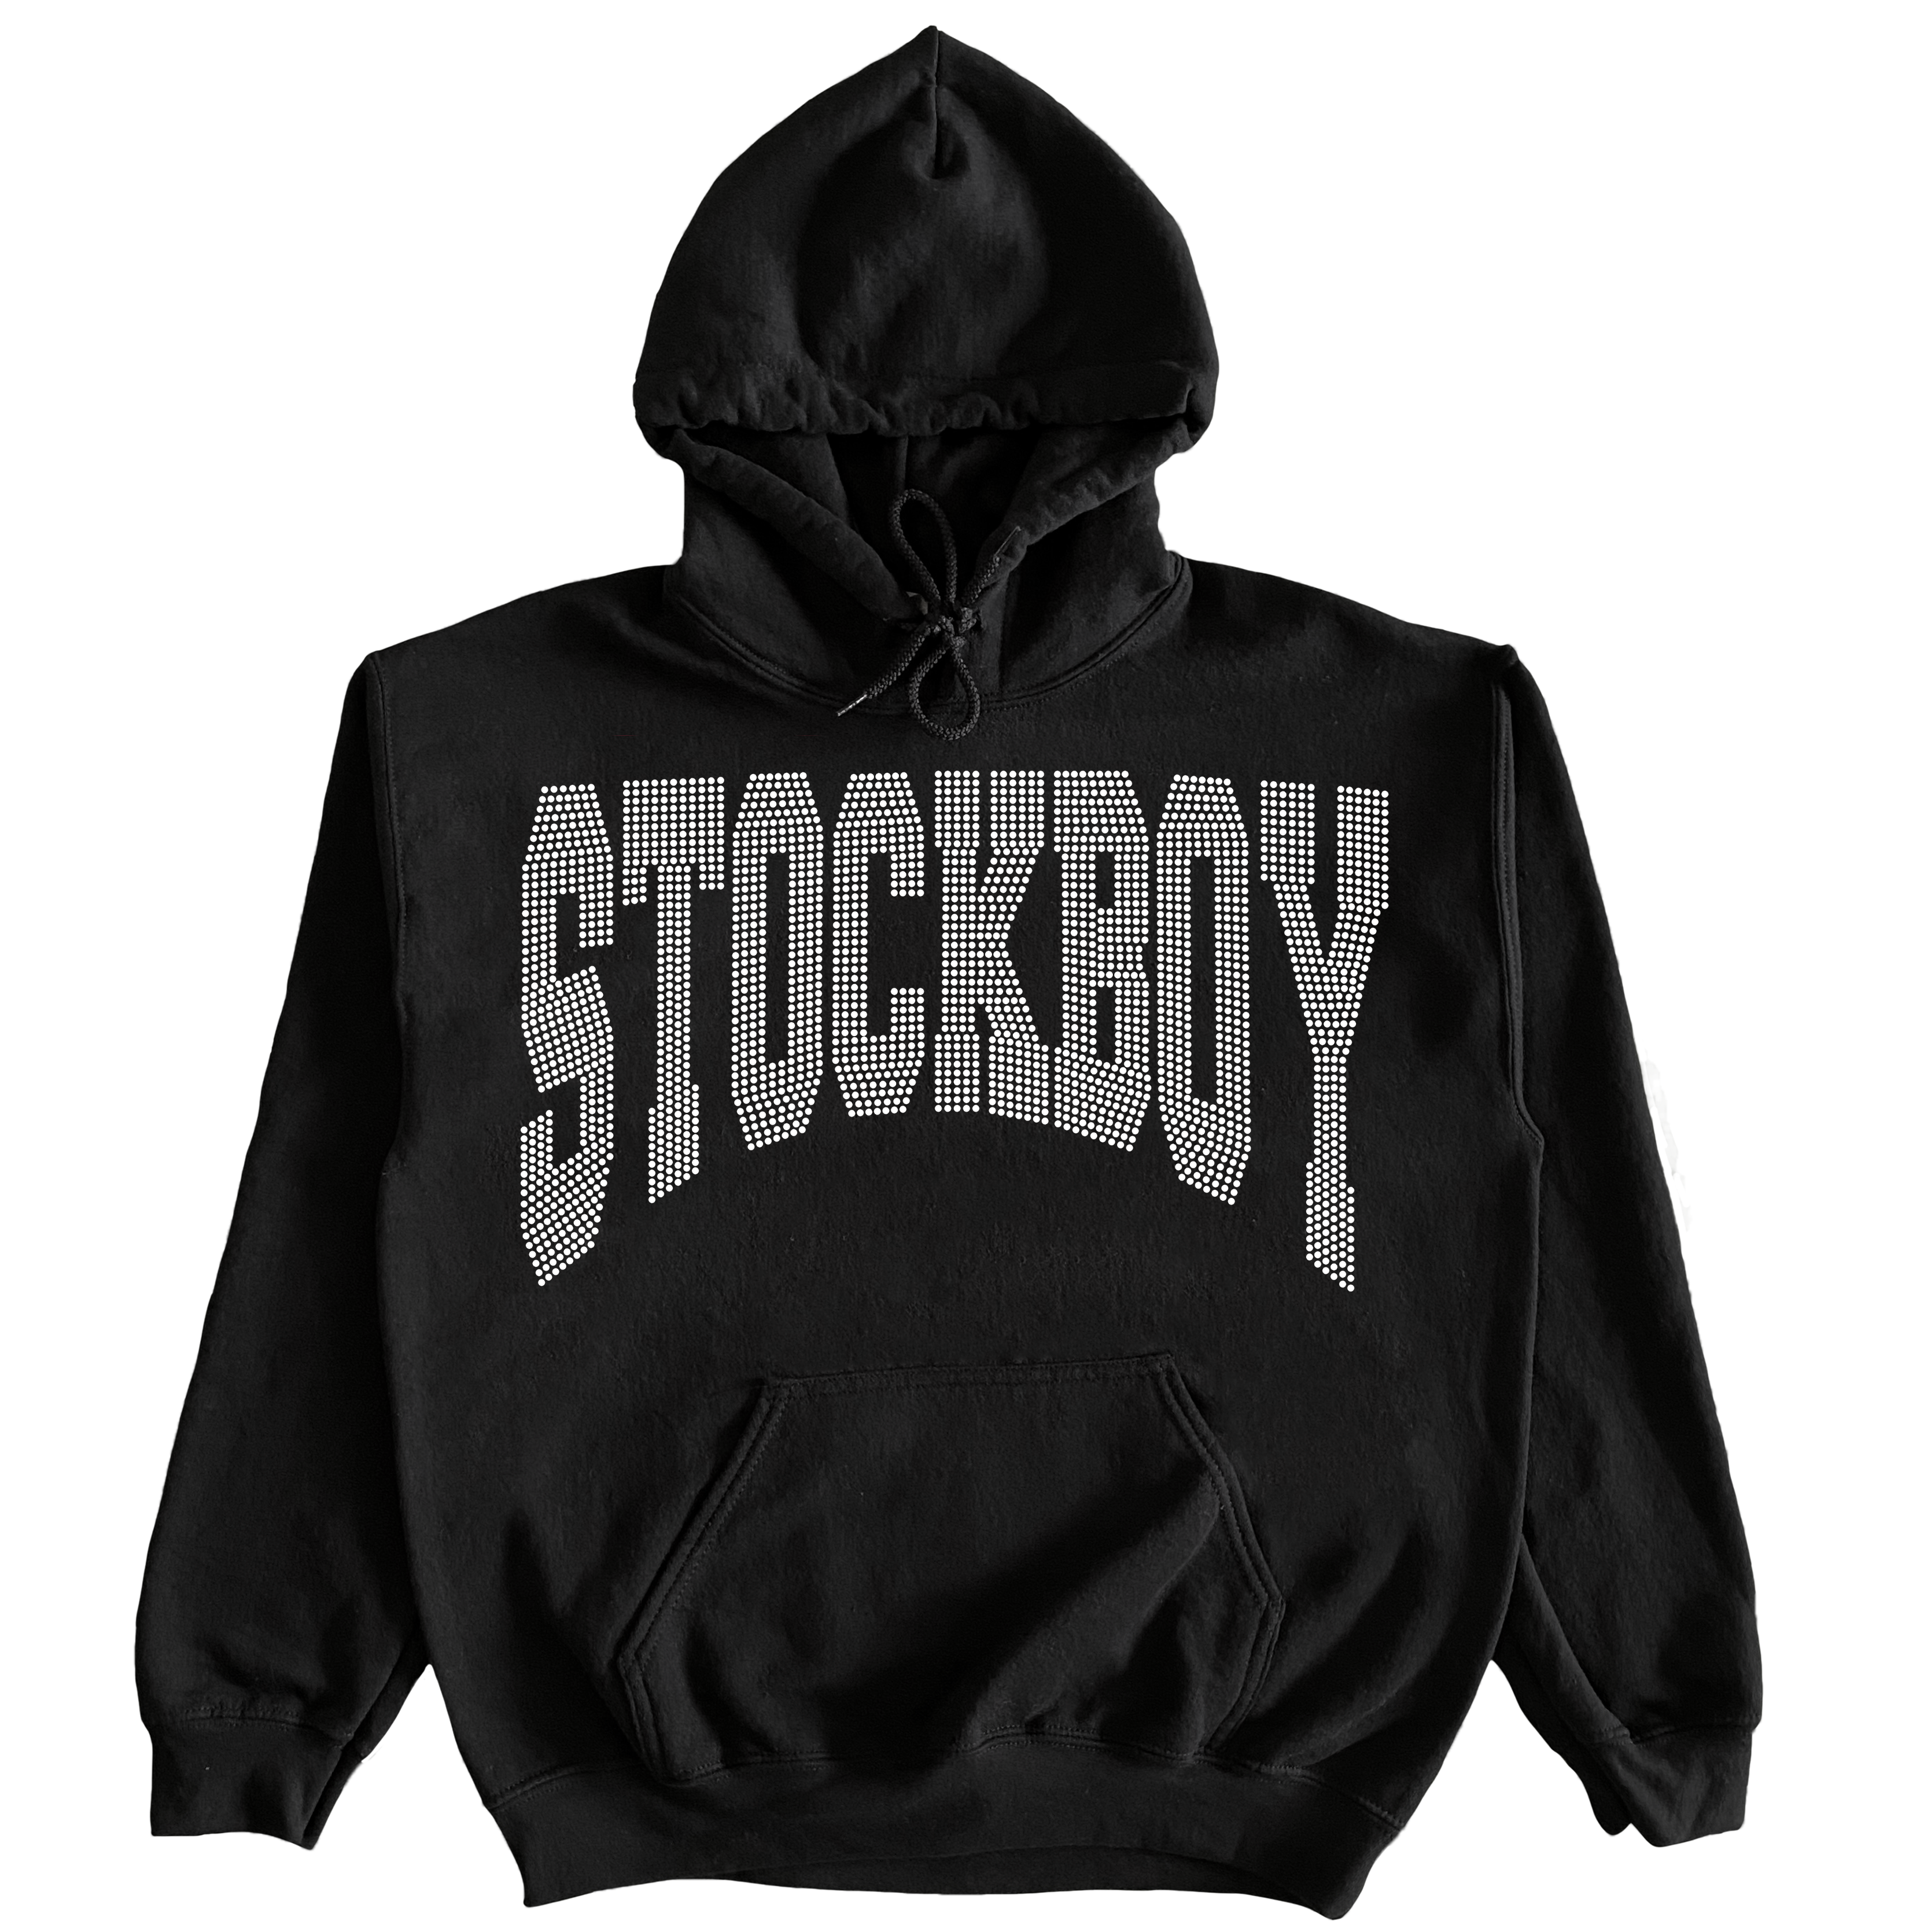 StockBoy Silver RhineStone Hoodie 30 USD